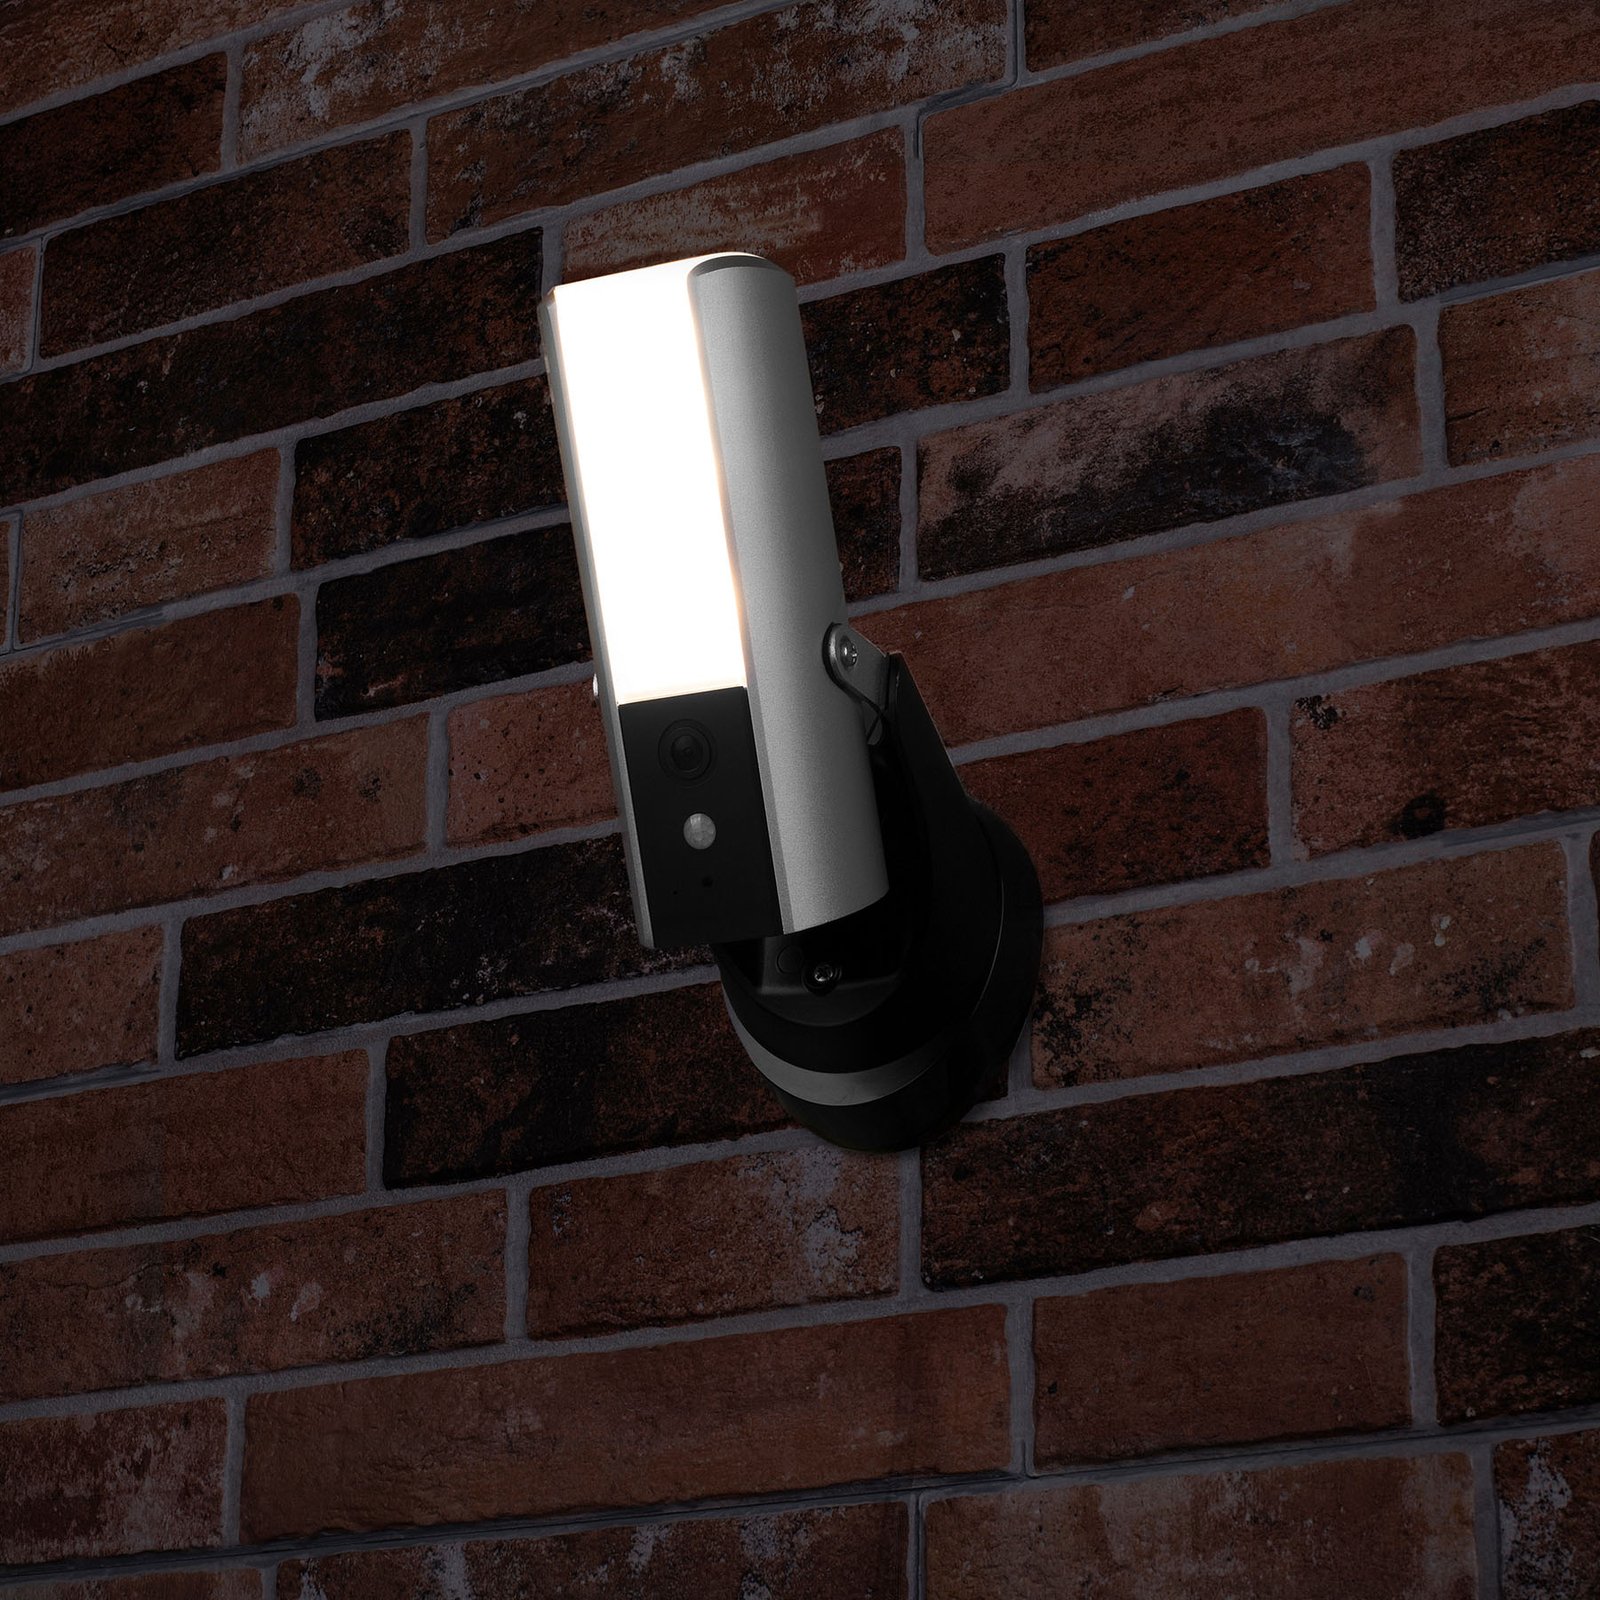 Monitorovacia kamera Guardian s LED svetlom